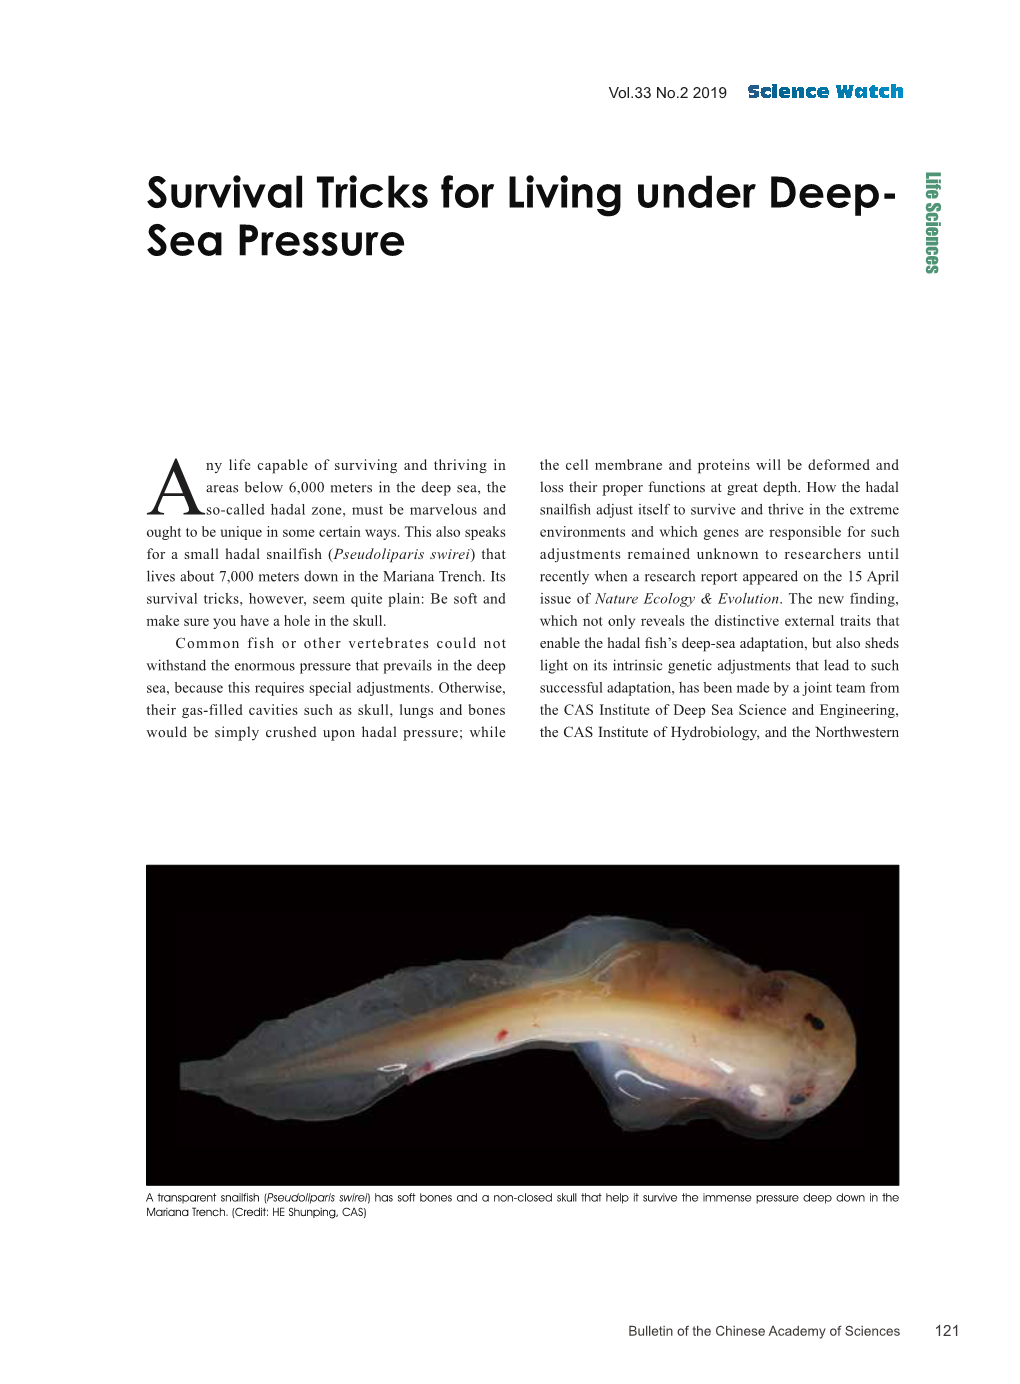 Survival Tricks for Living Under Deep- Sea Pressure